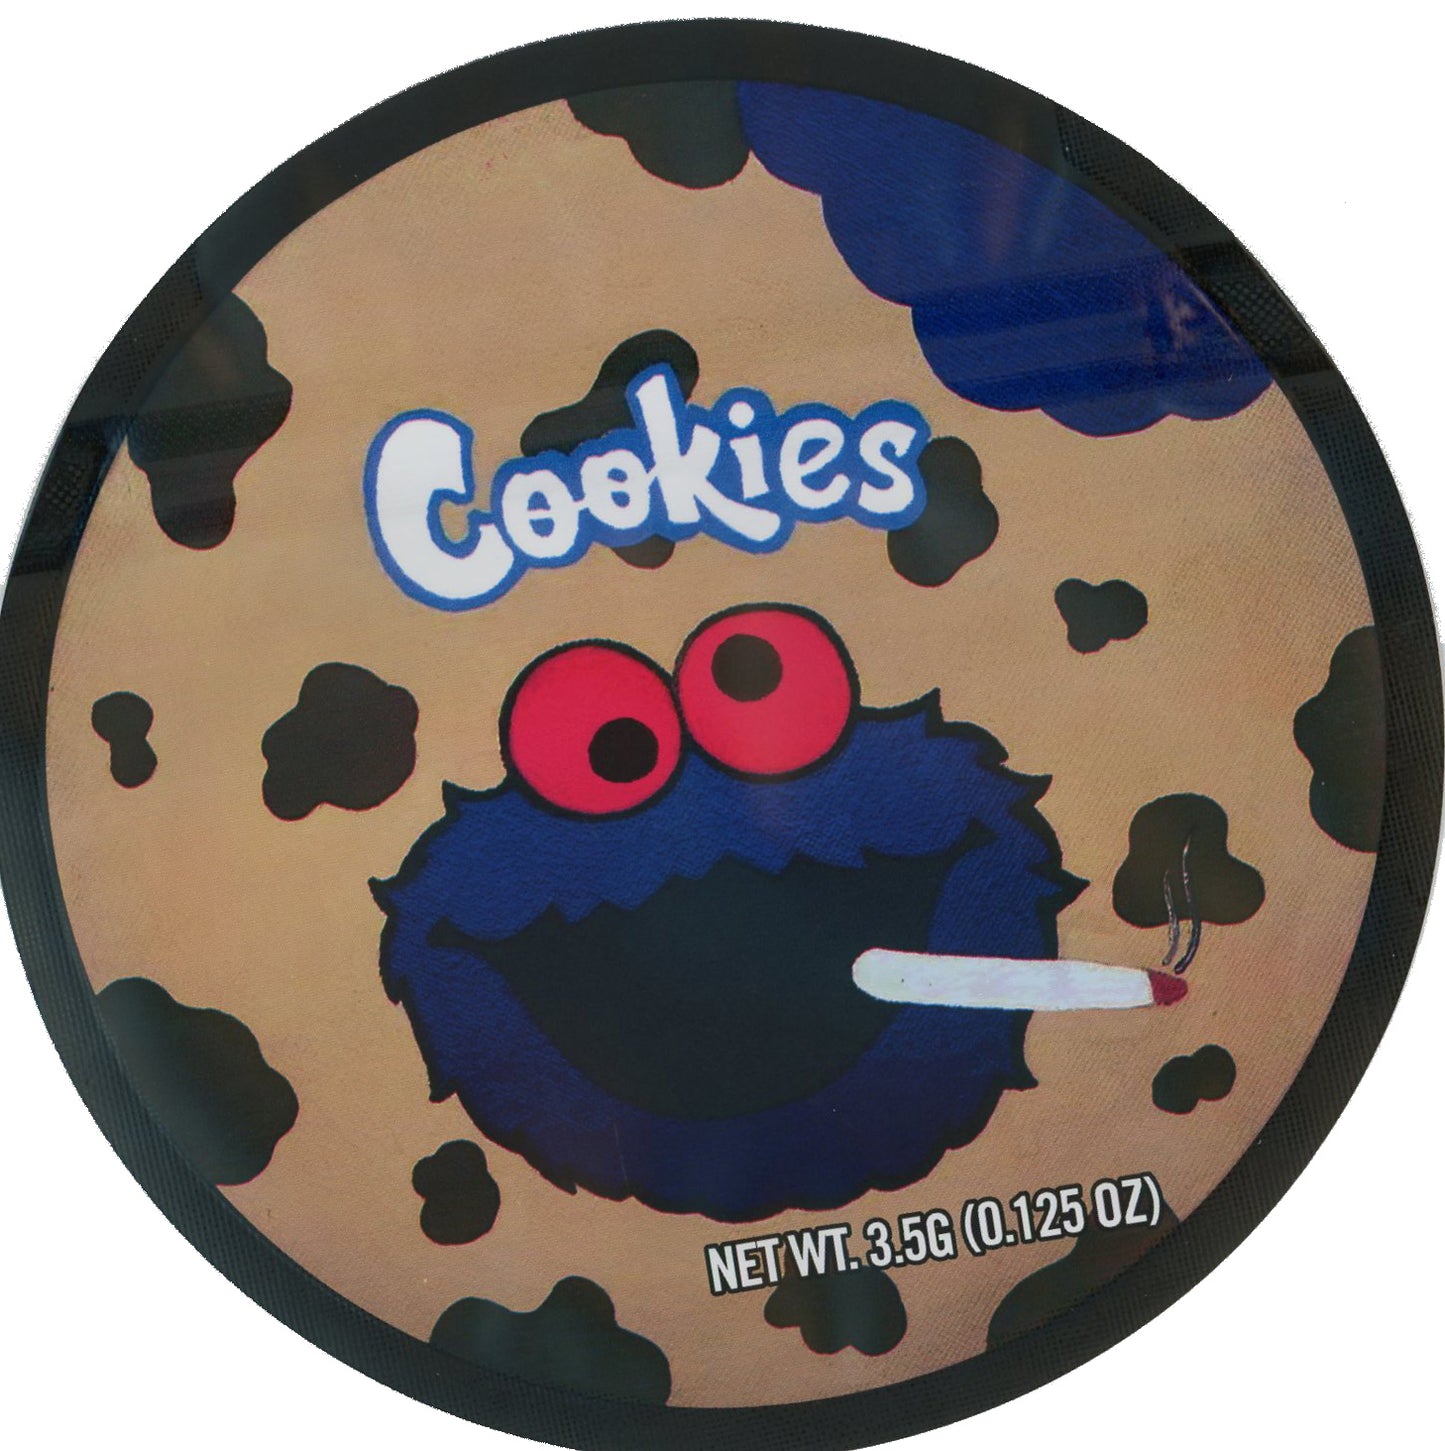 Monster Cookies Mylar Bags 3.5g Cookies